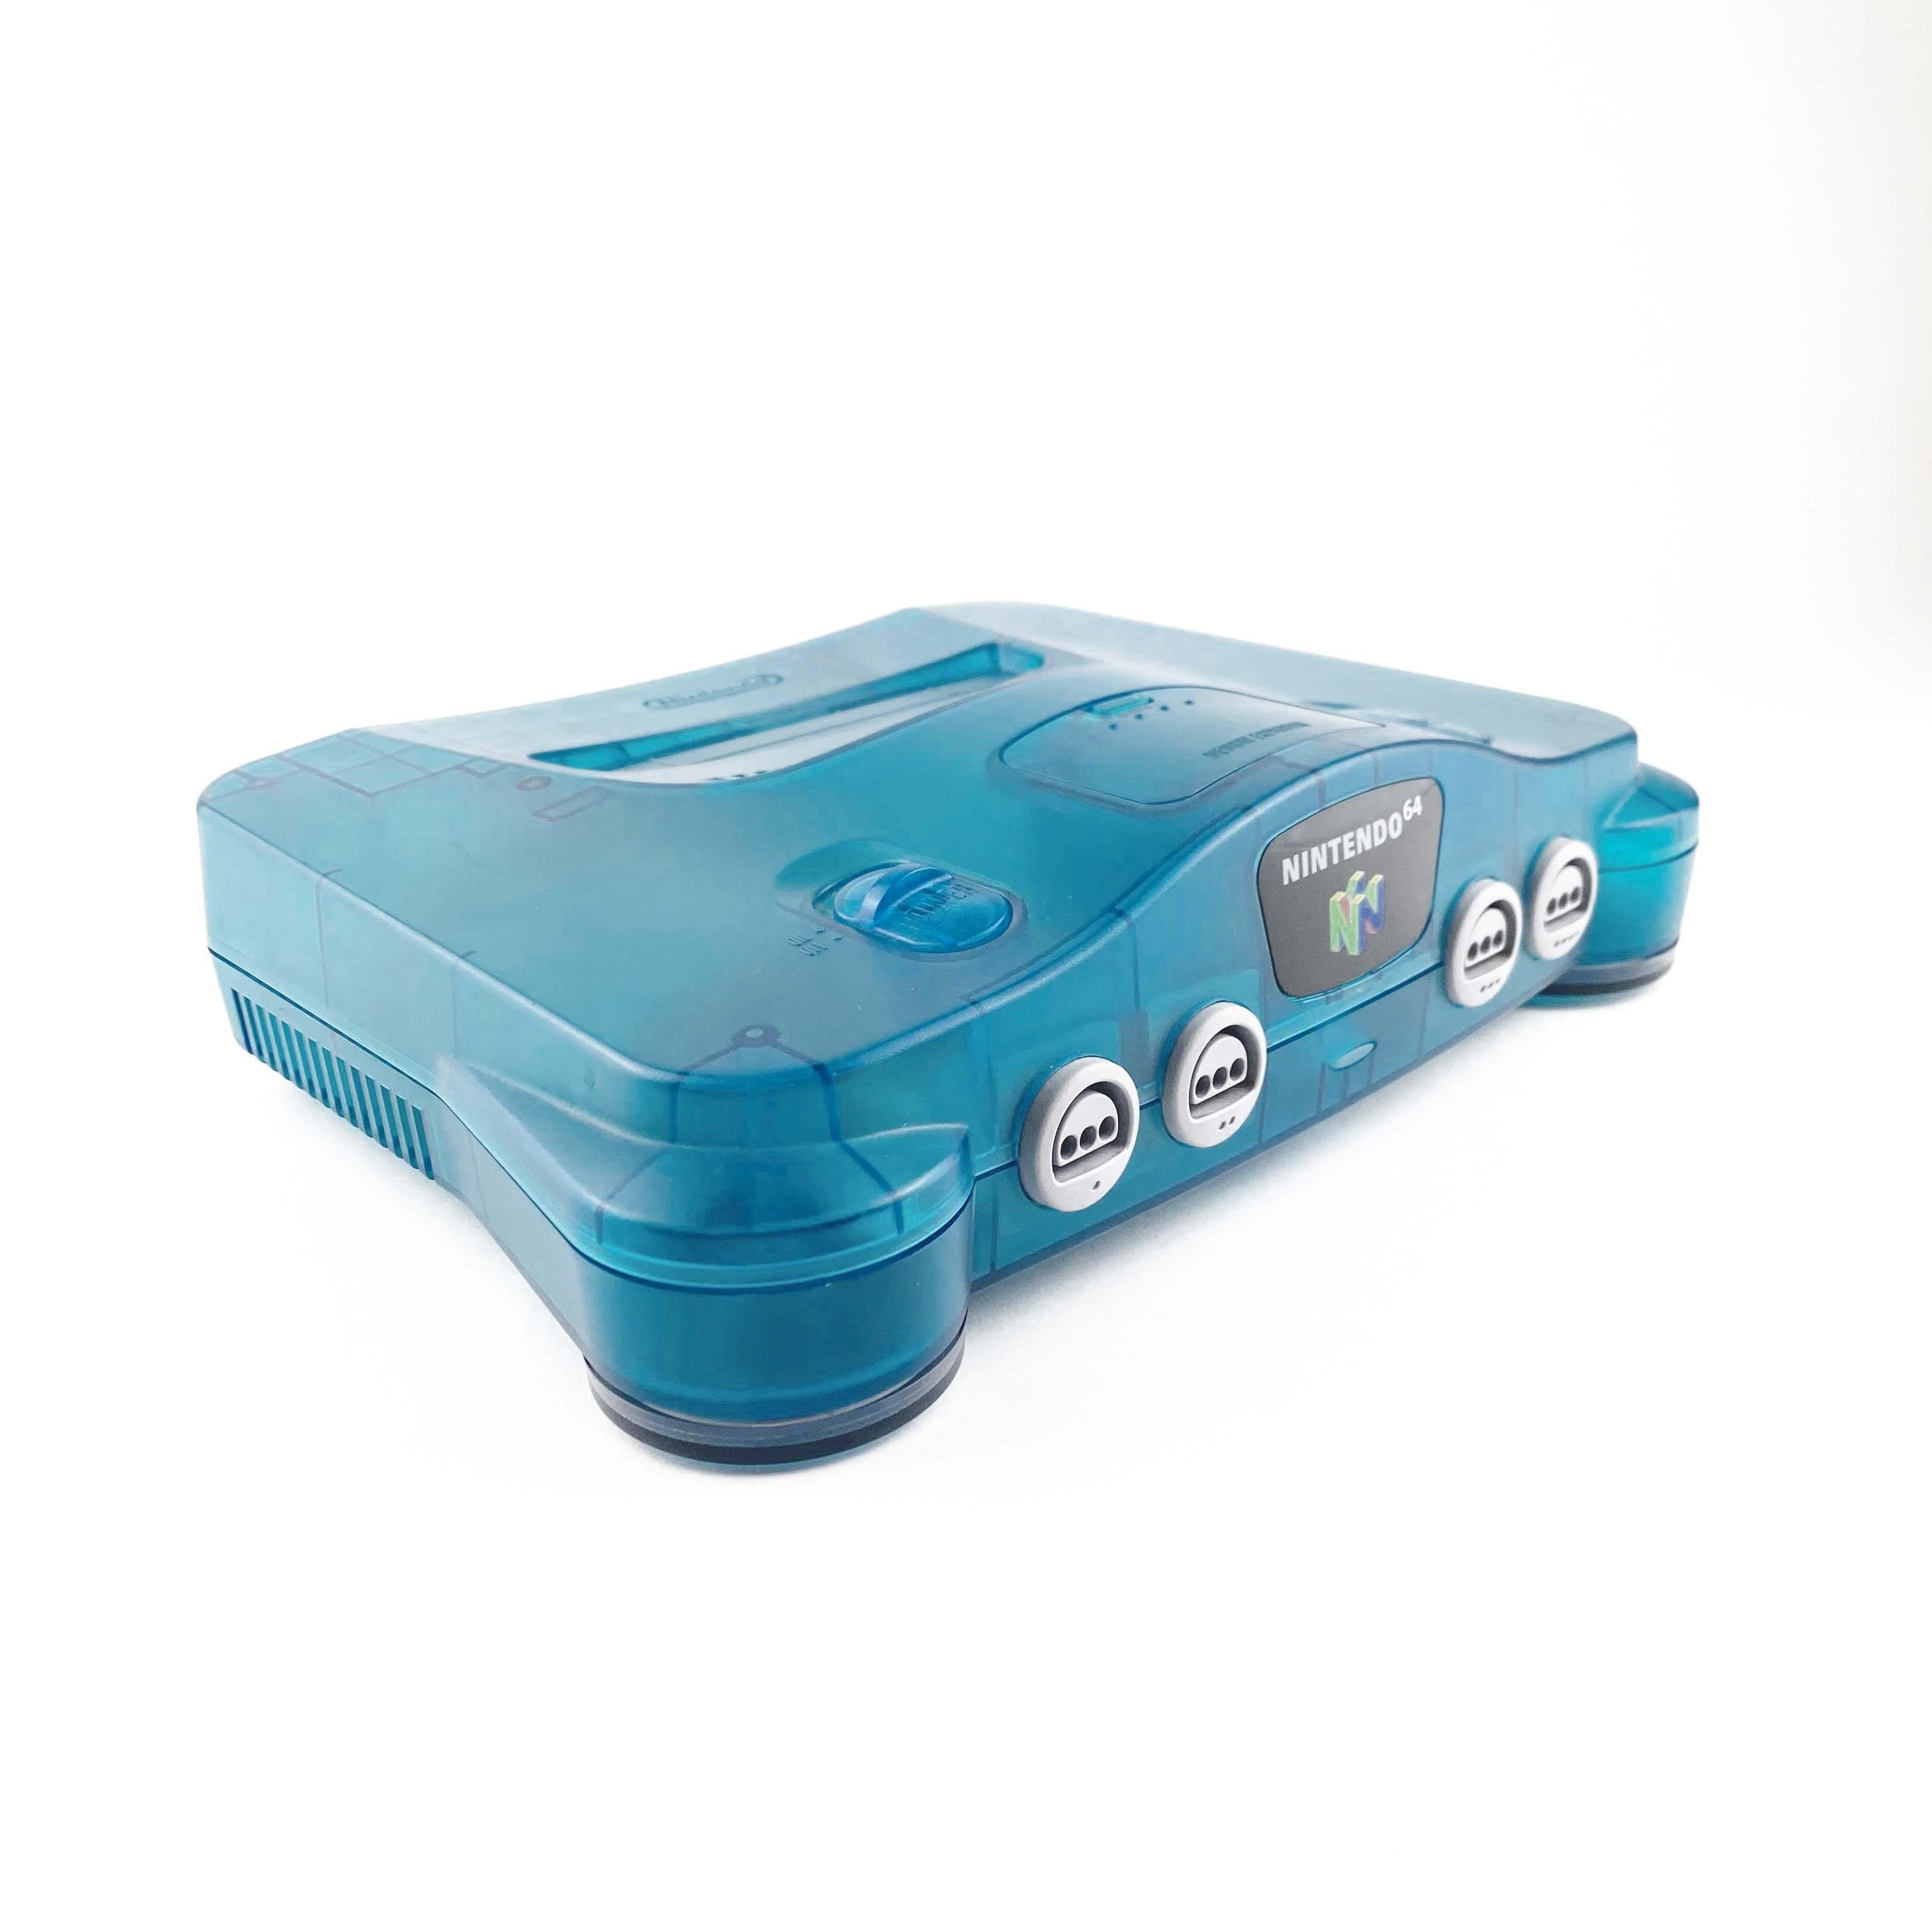 Nintendo N64 Funtastic Ice Blue Console Bundle (NUS-001)